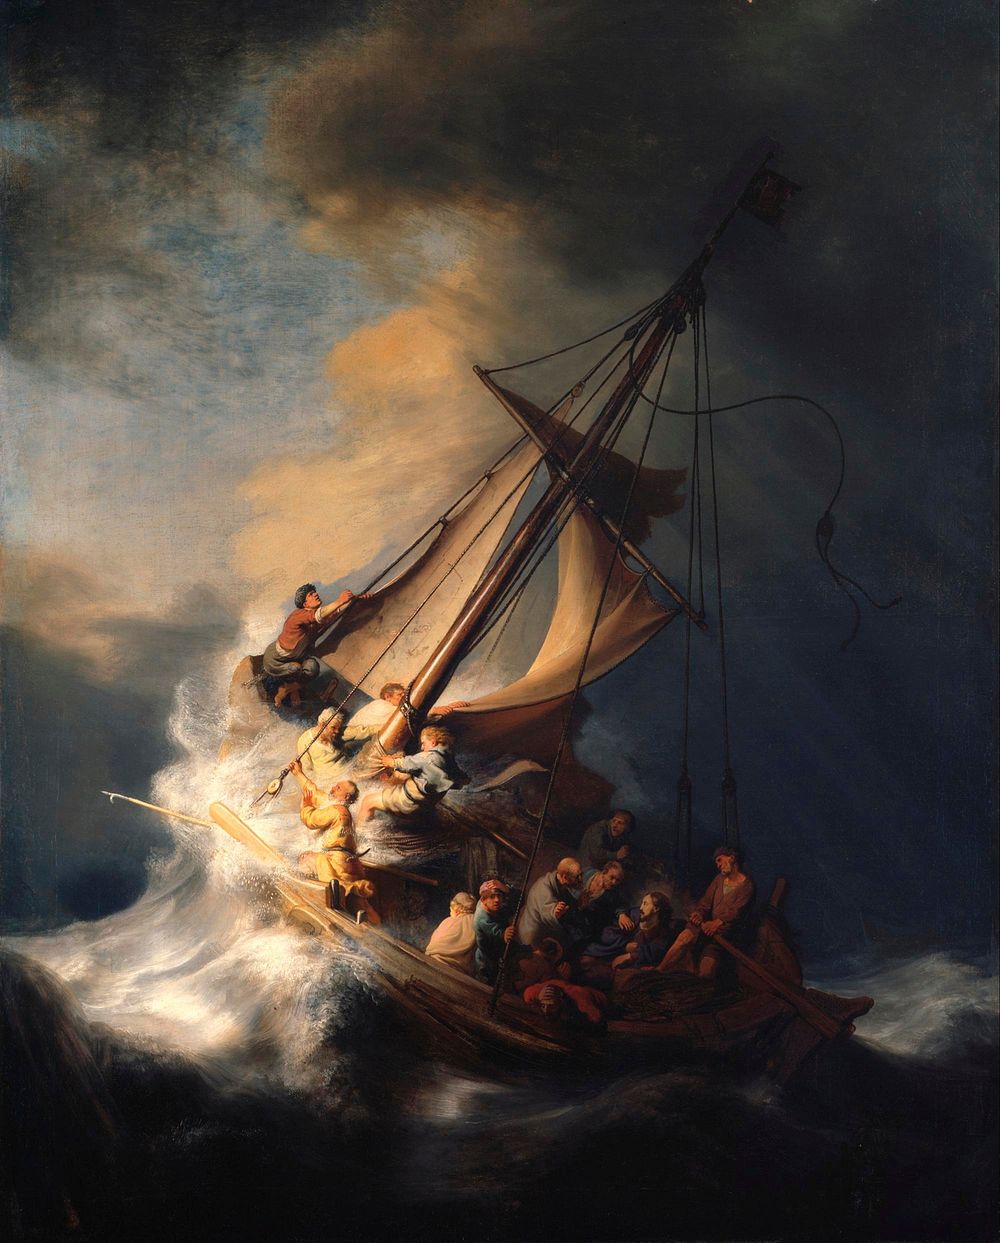 Rembrandt van Rijn's The Storm on the Sea of Galilee (1633)